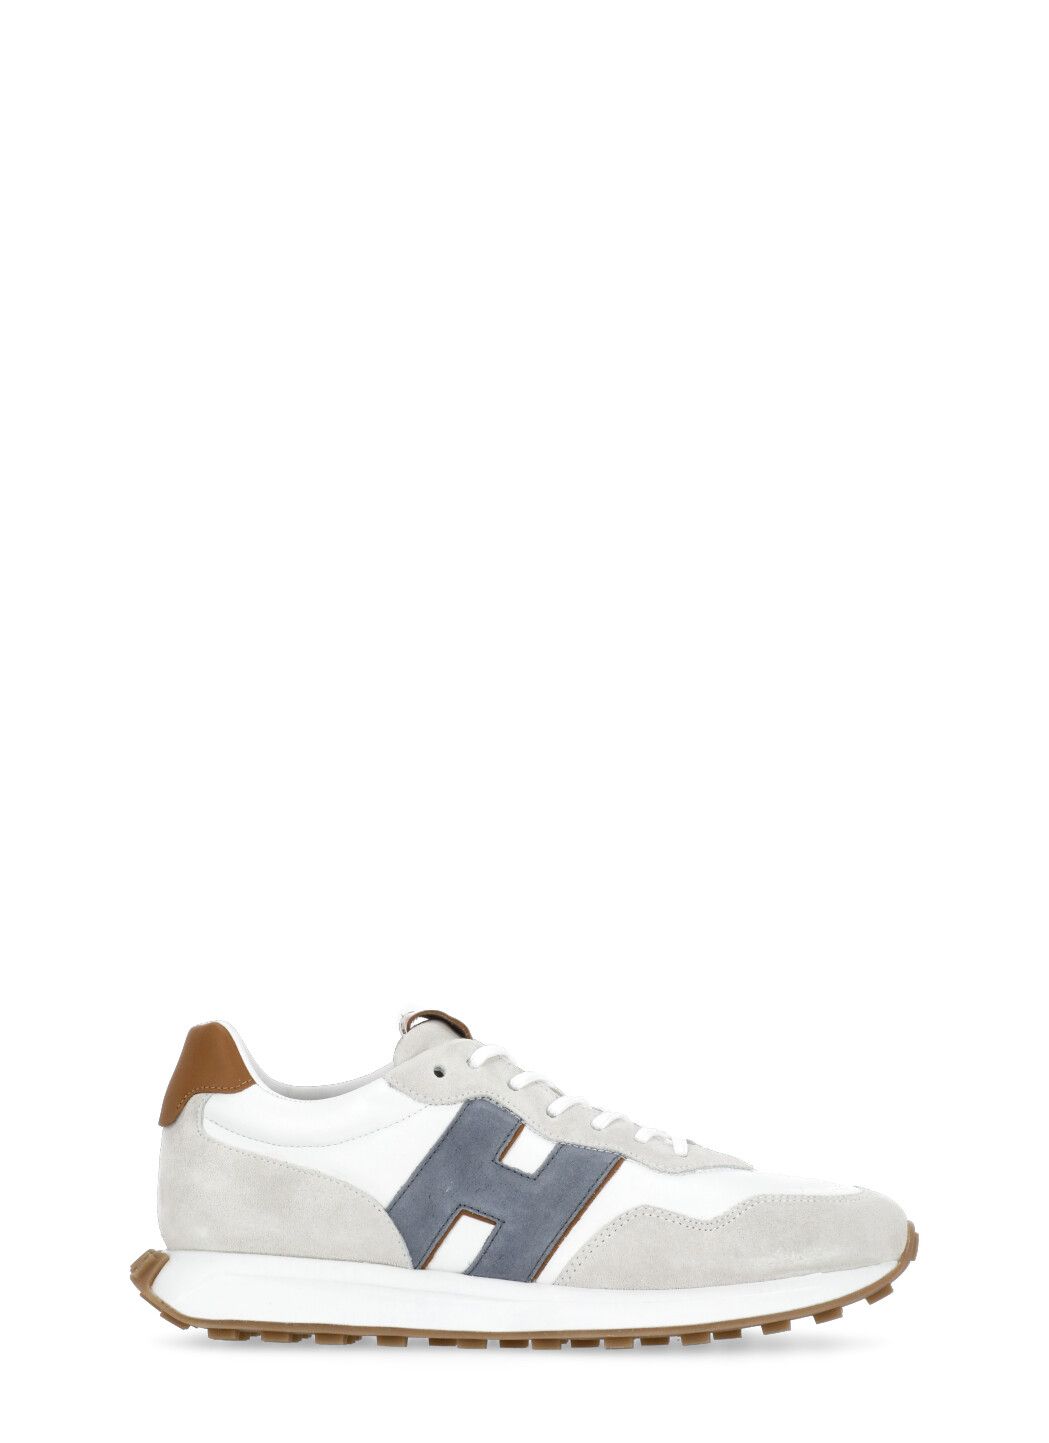 H601 sneakers